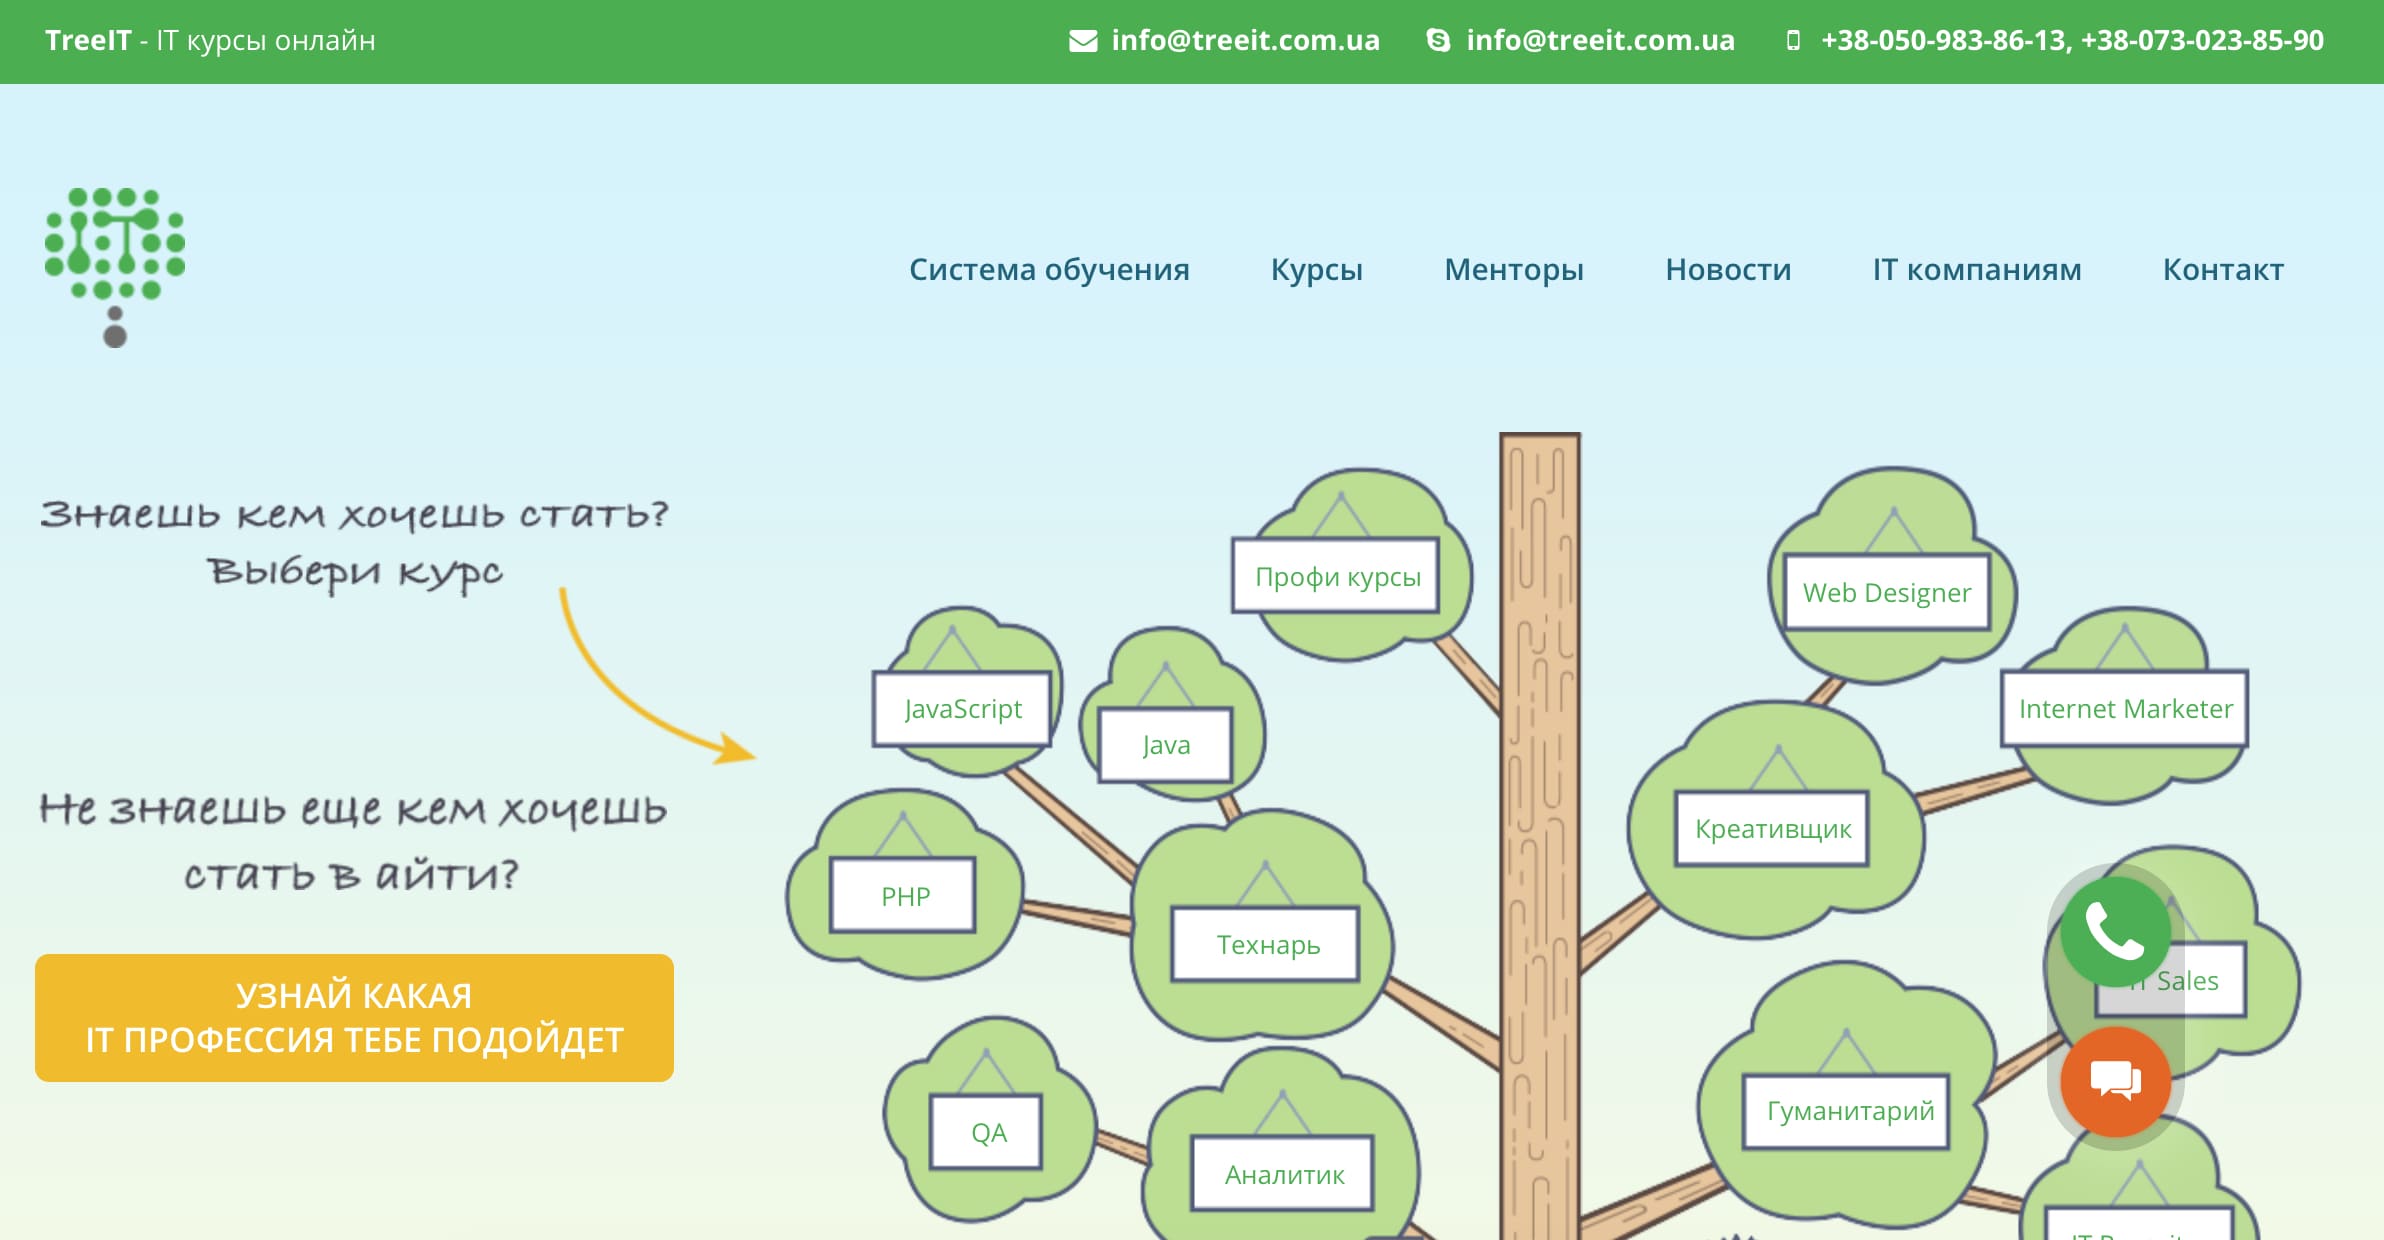 TreeIT.com.ua, скриншот интерфейса 1